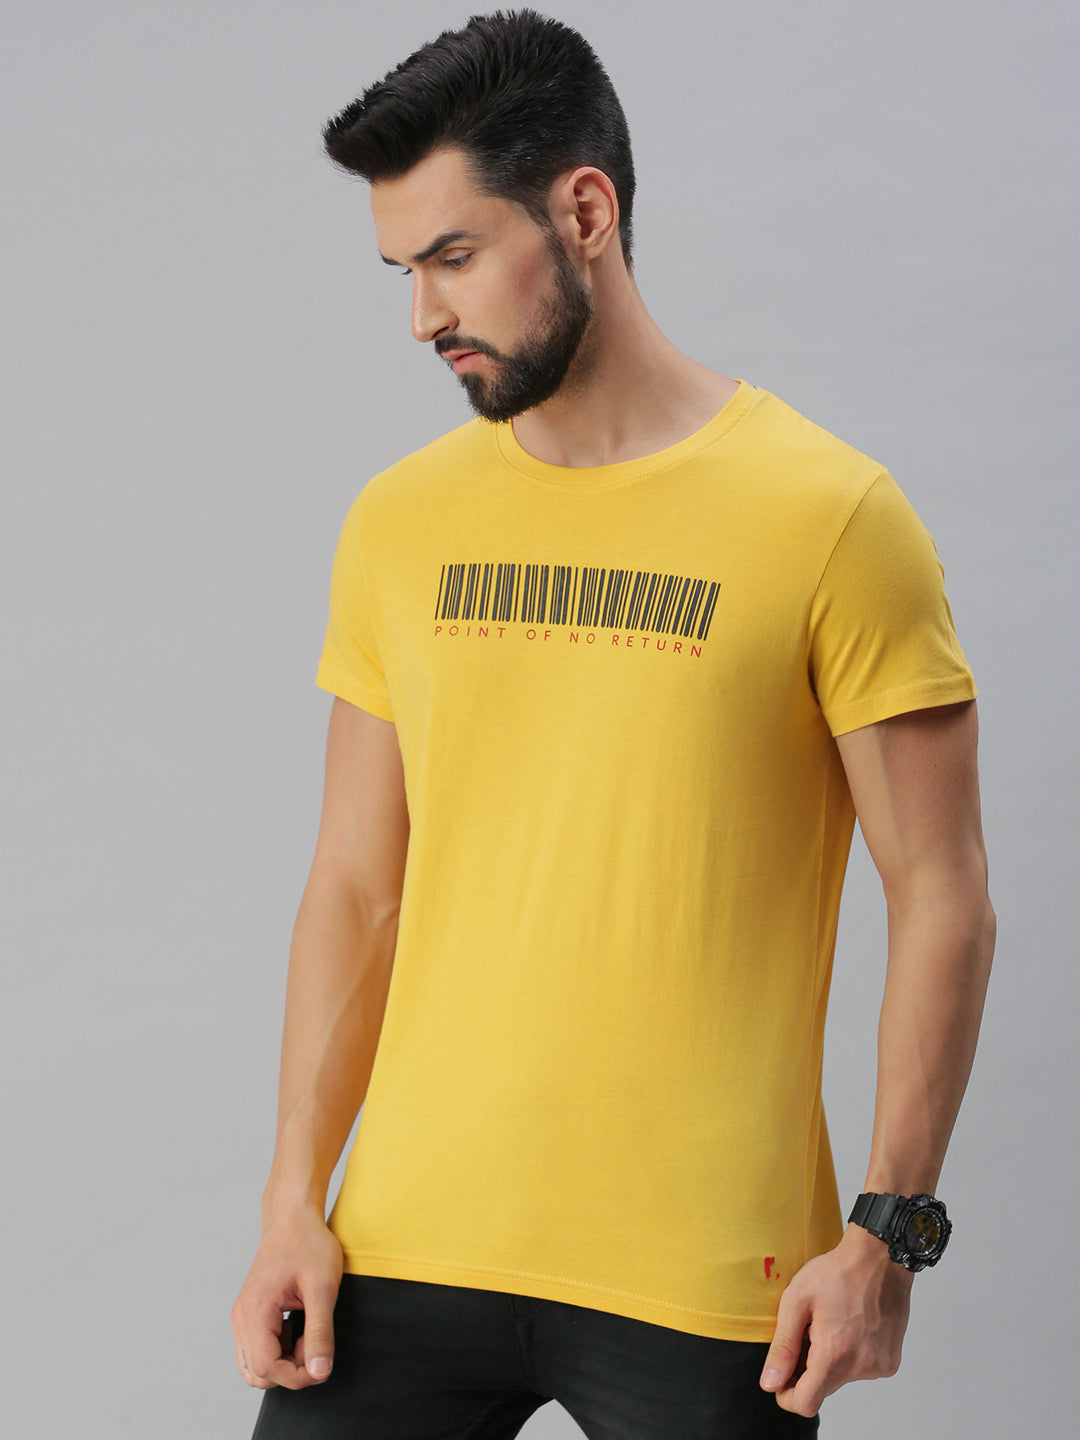 Barcode printed yellow t-shirt